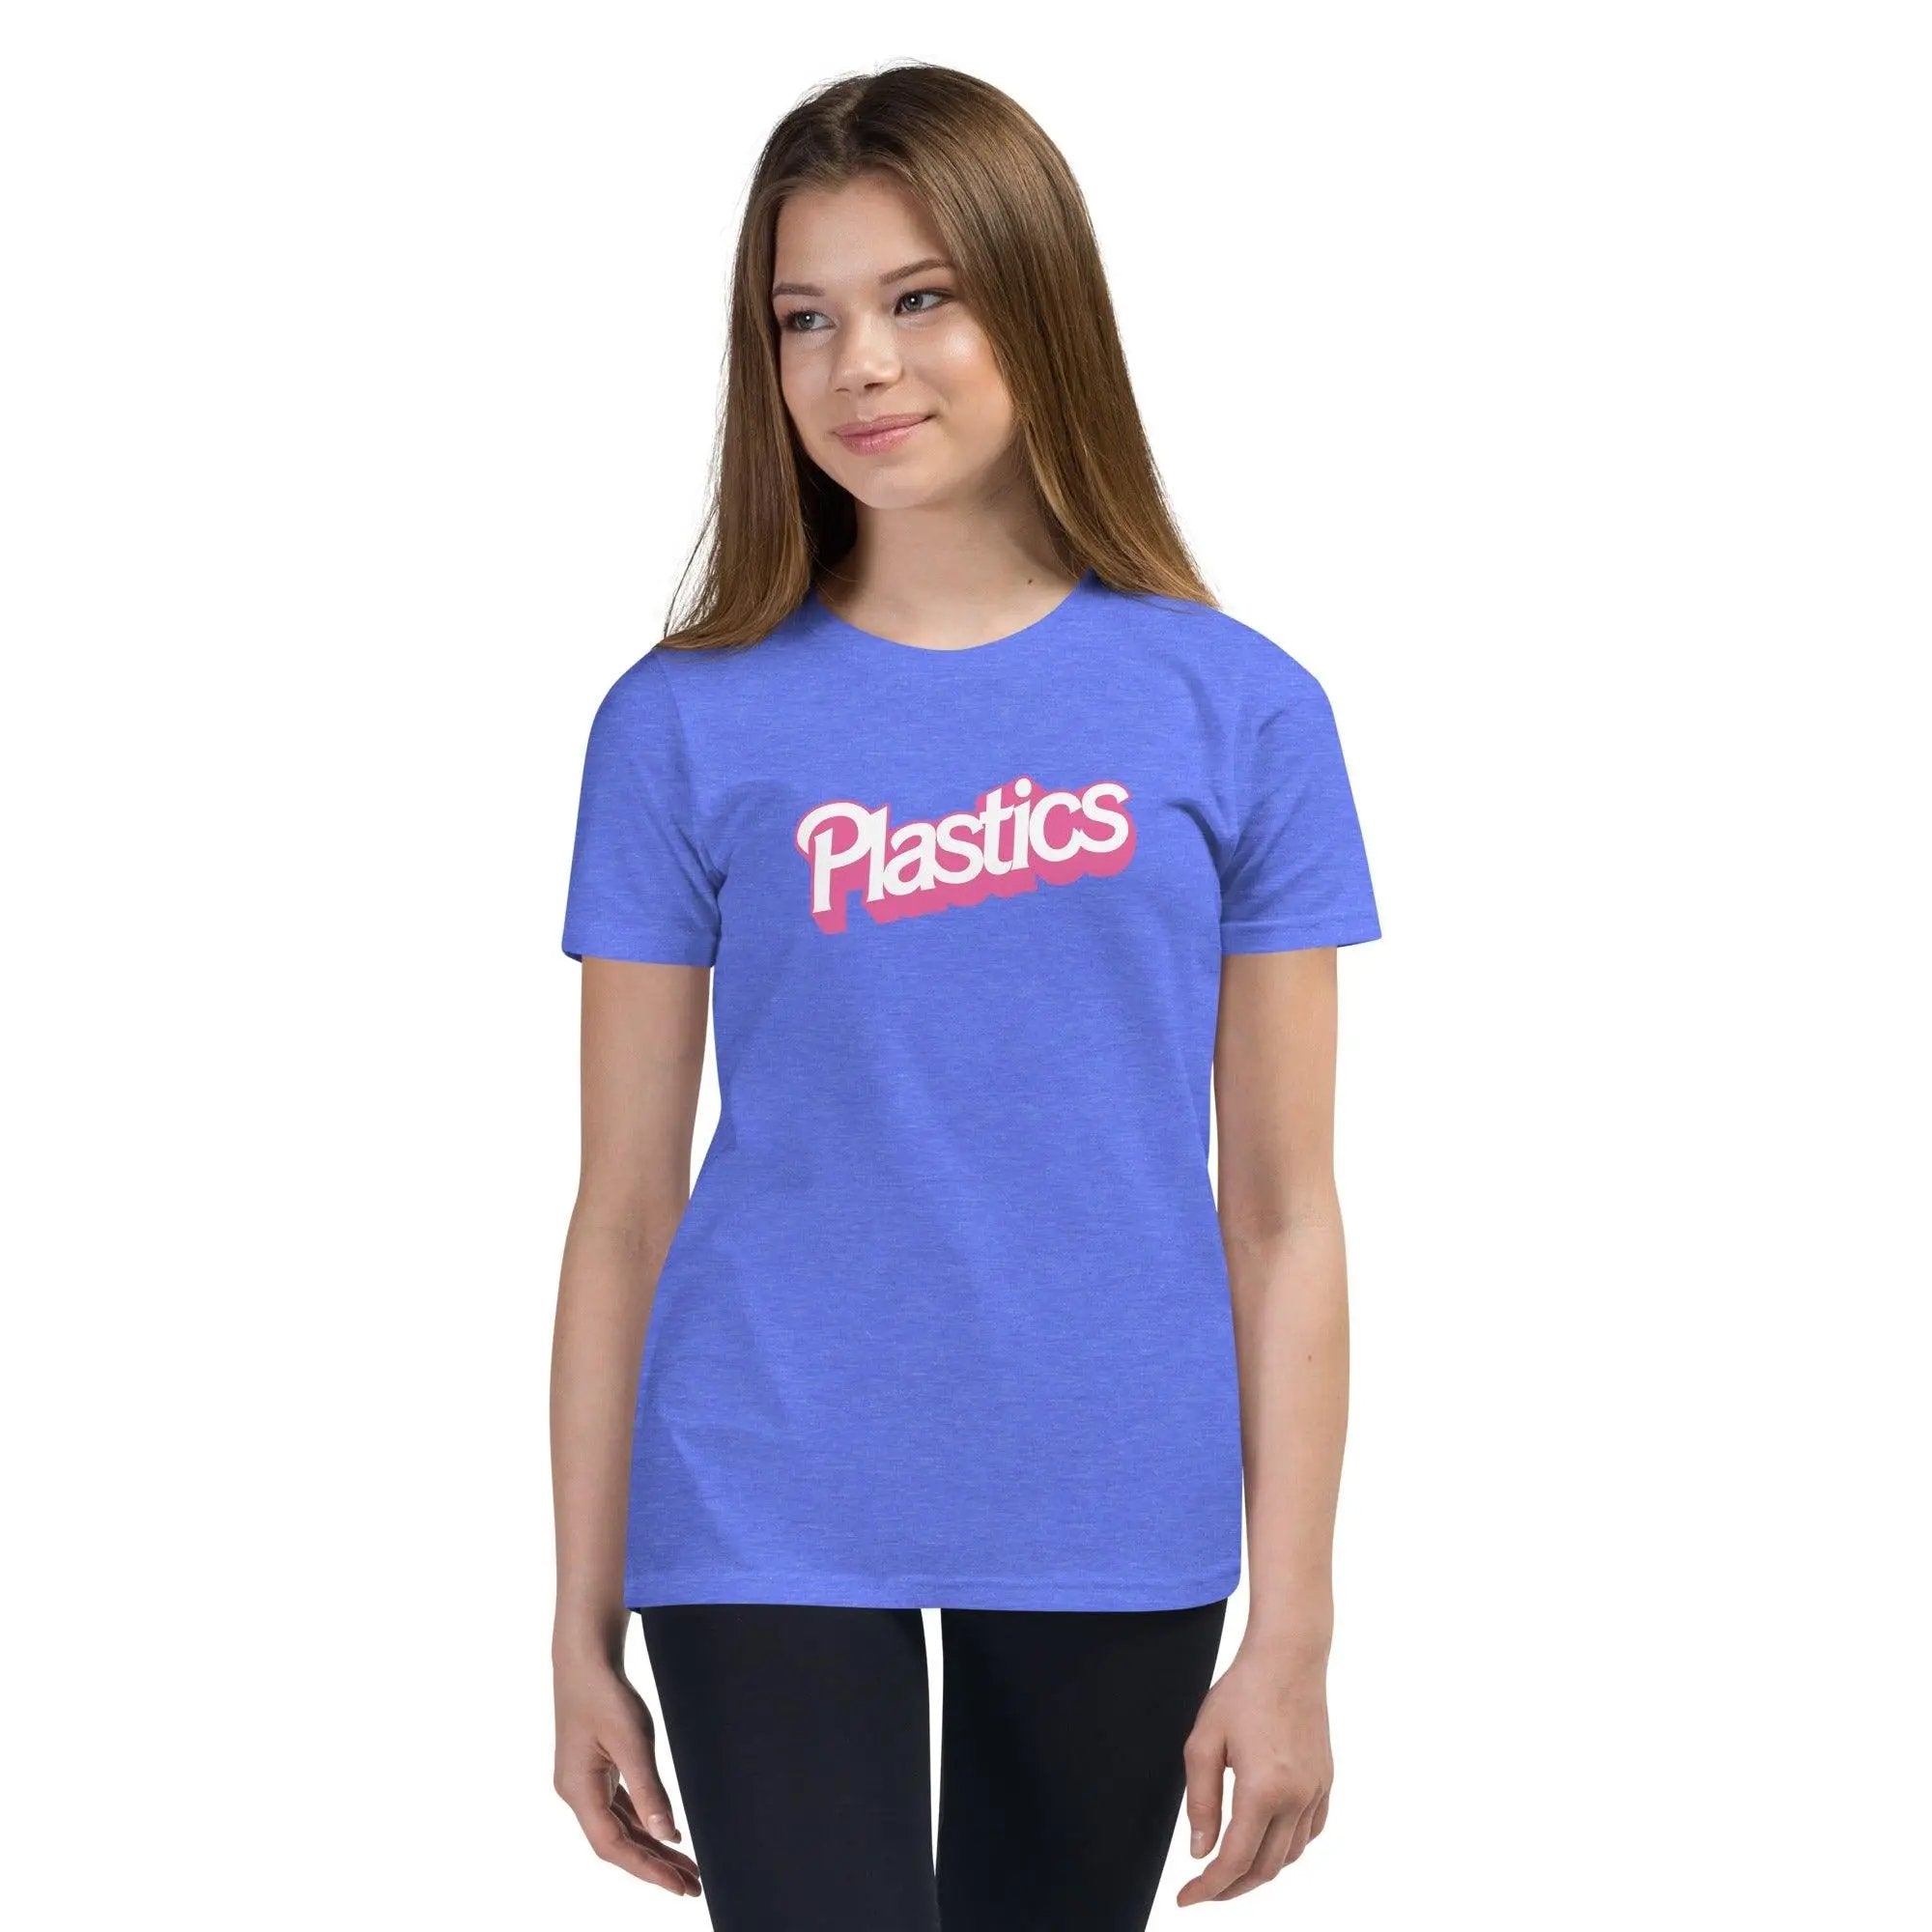 Plastics Youth Short Sleeve T-Shirt